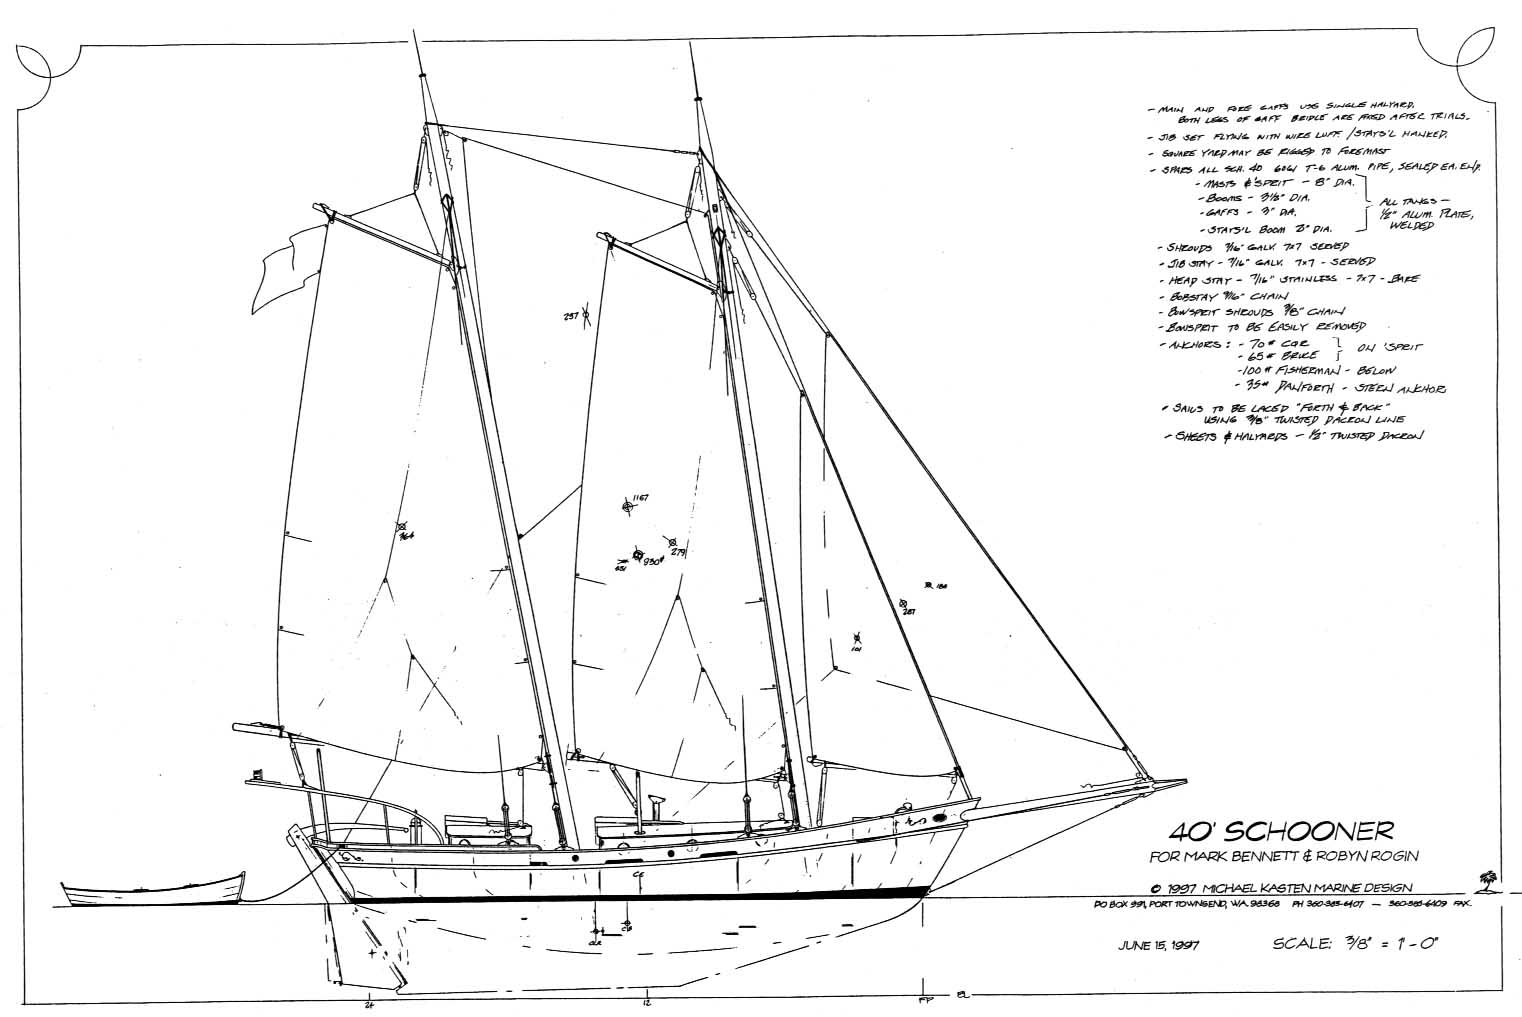 40' Schooner BENROGIN - Kasten Marine Design